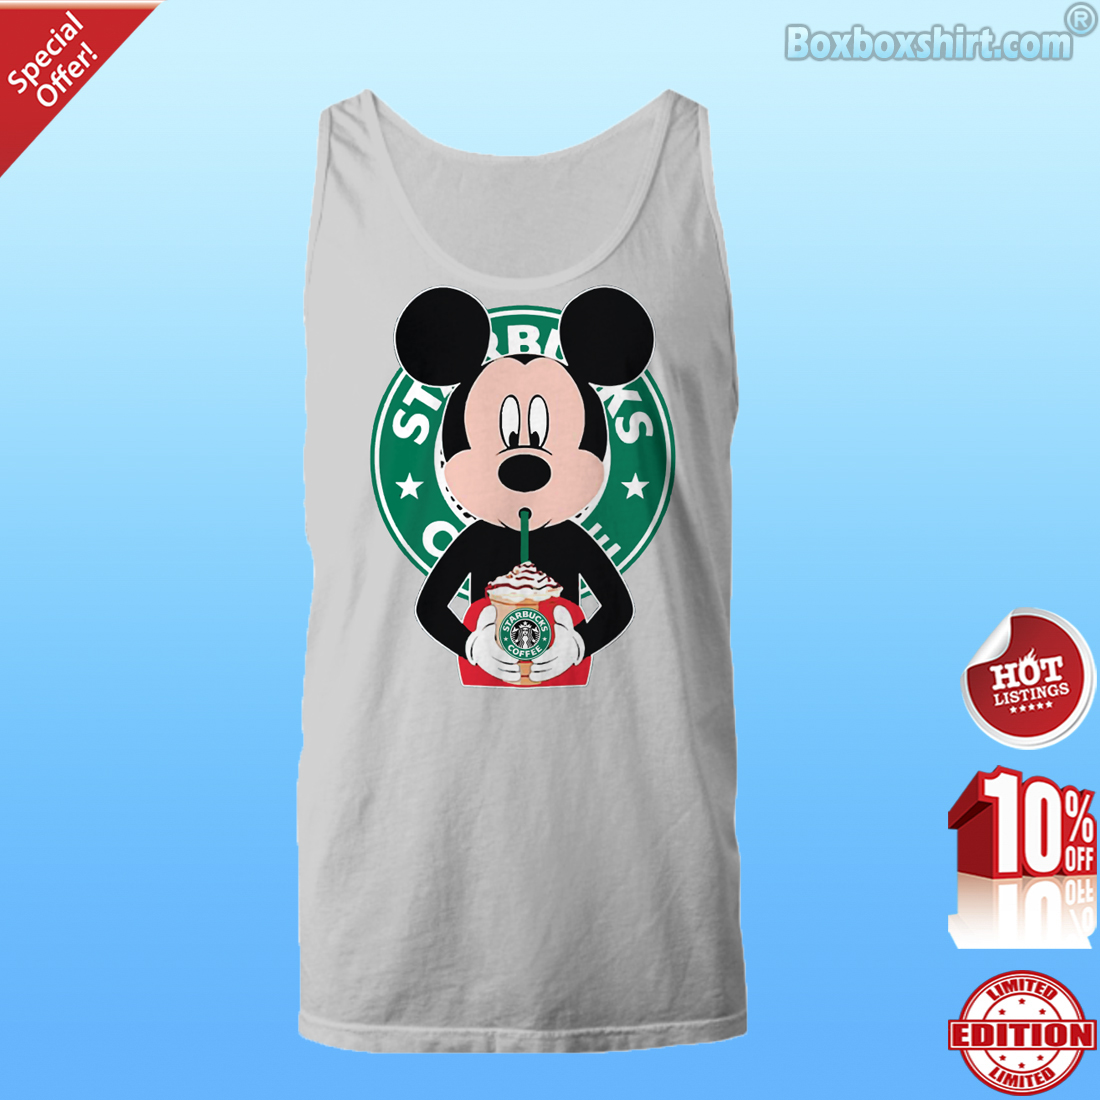 Mickey mouse drinks starbucks coffee shirt, premium tee, unisex tee 2